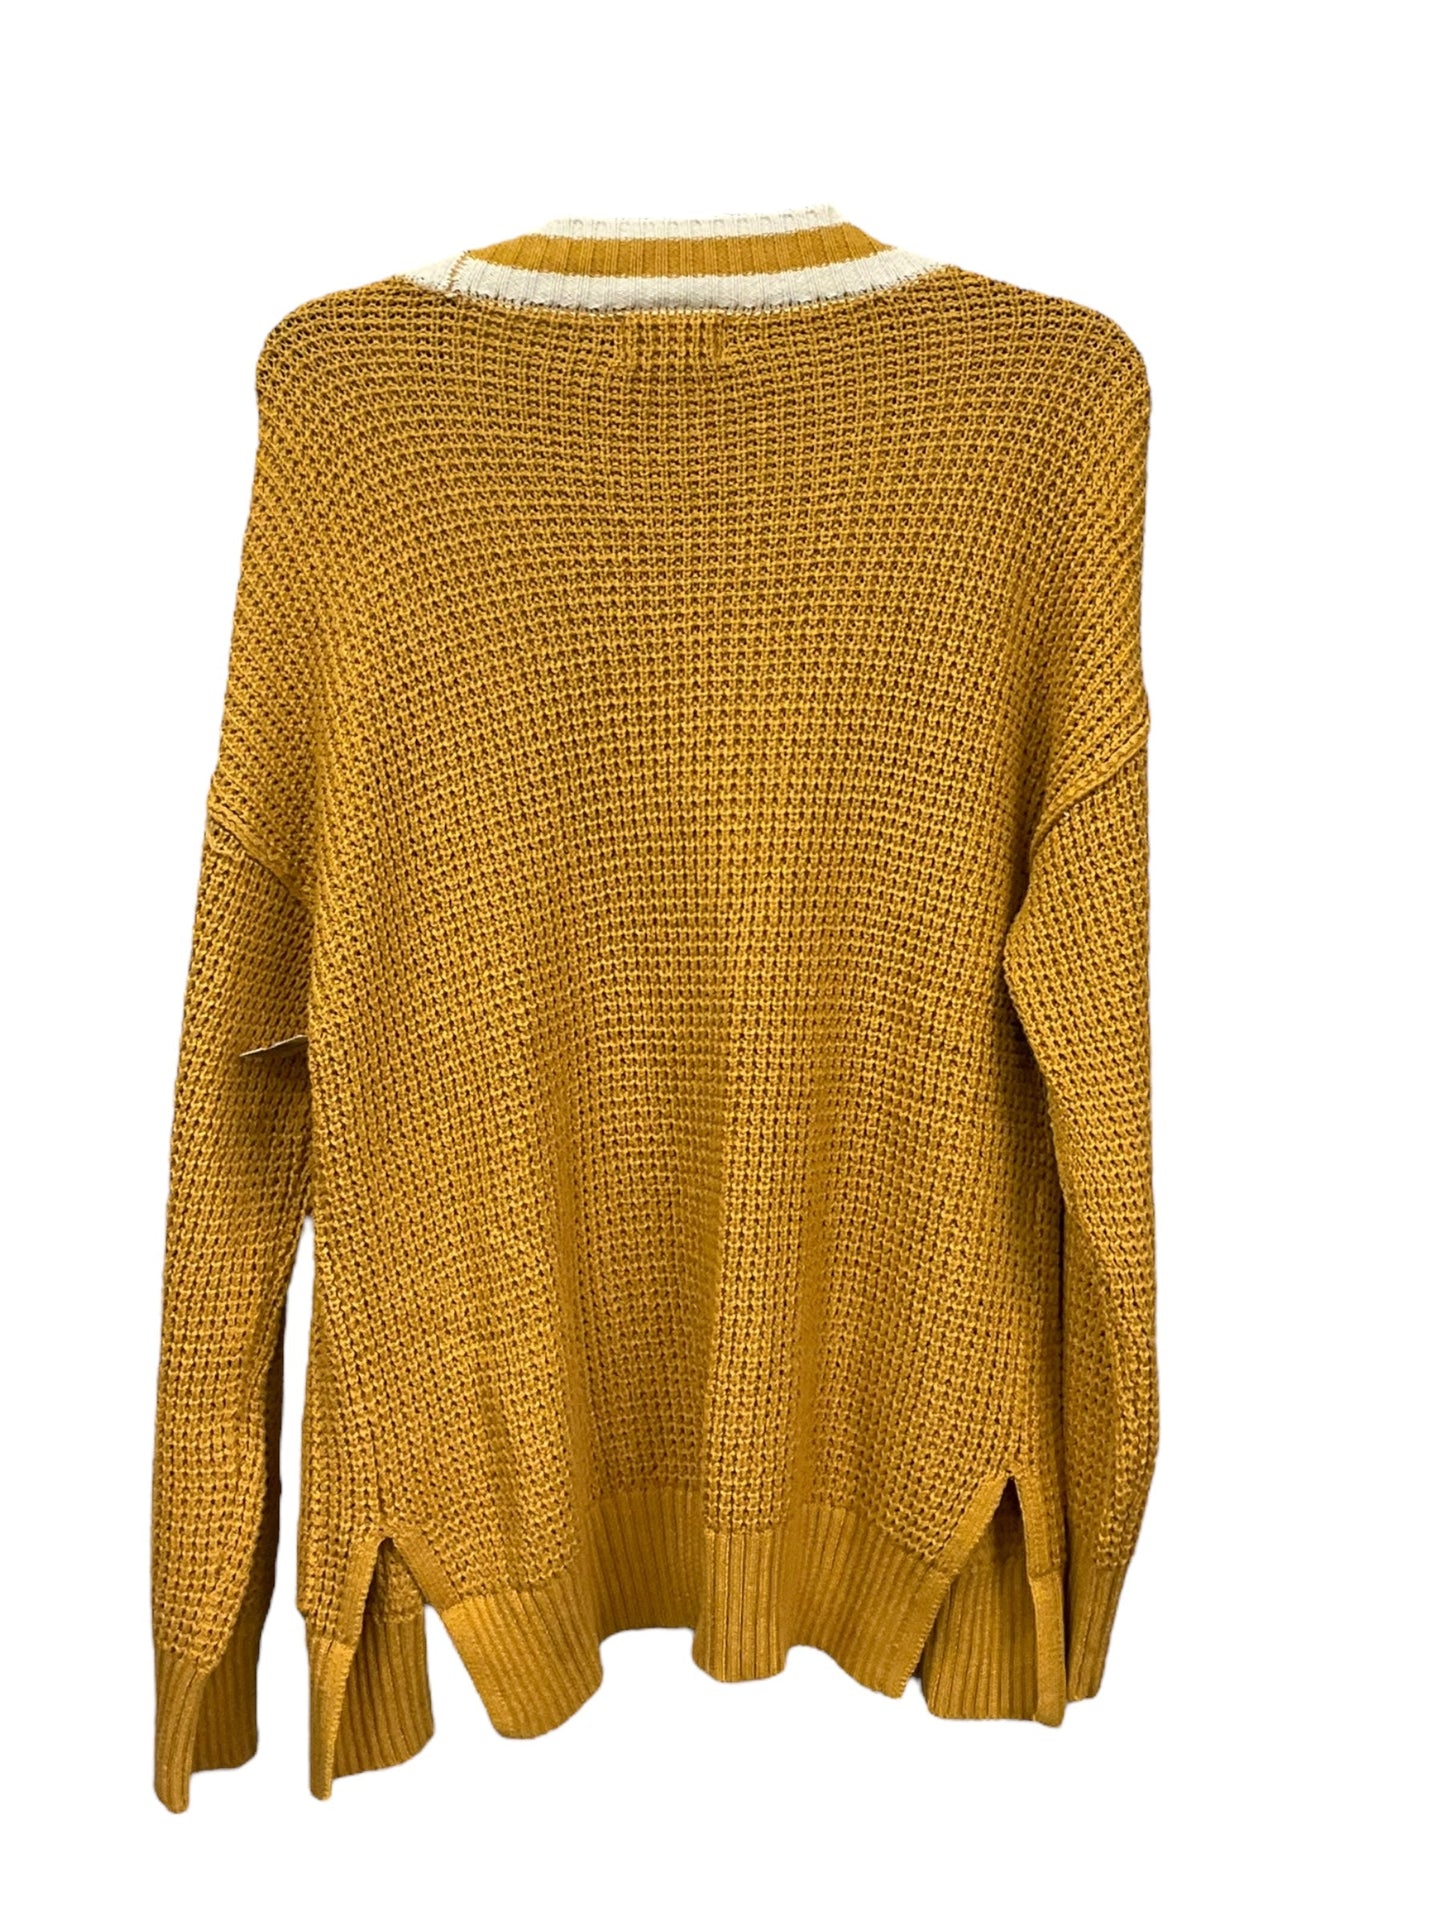 Gold Sweater Cardigan Universal Thread, Size Xs